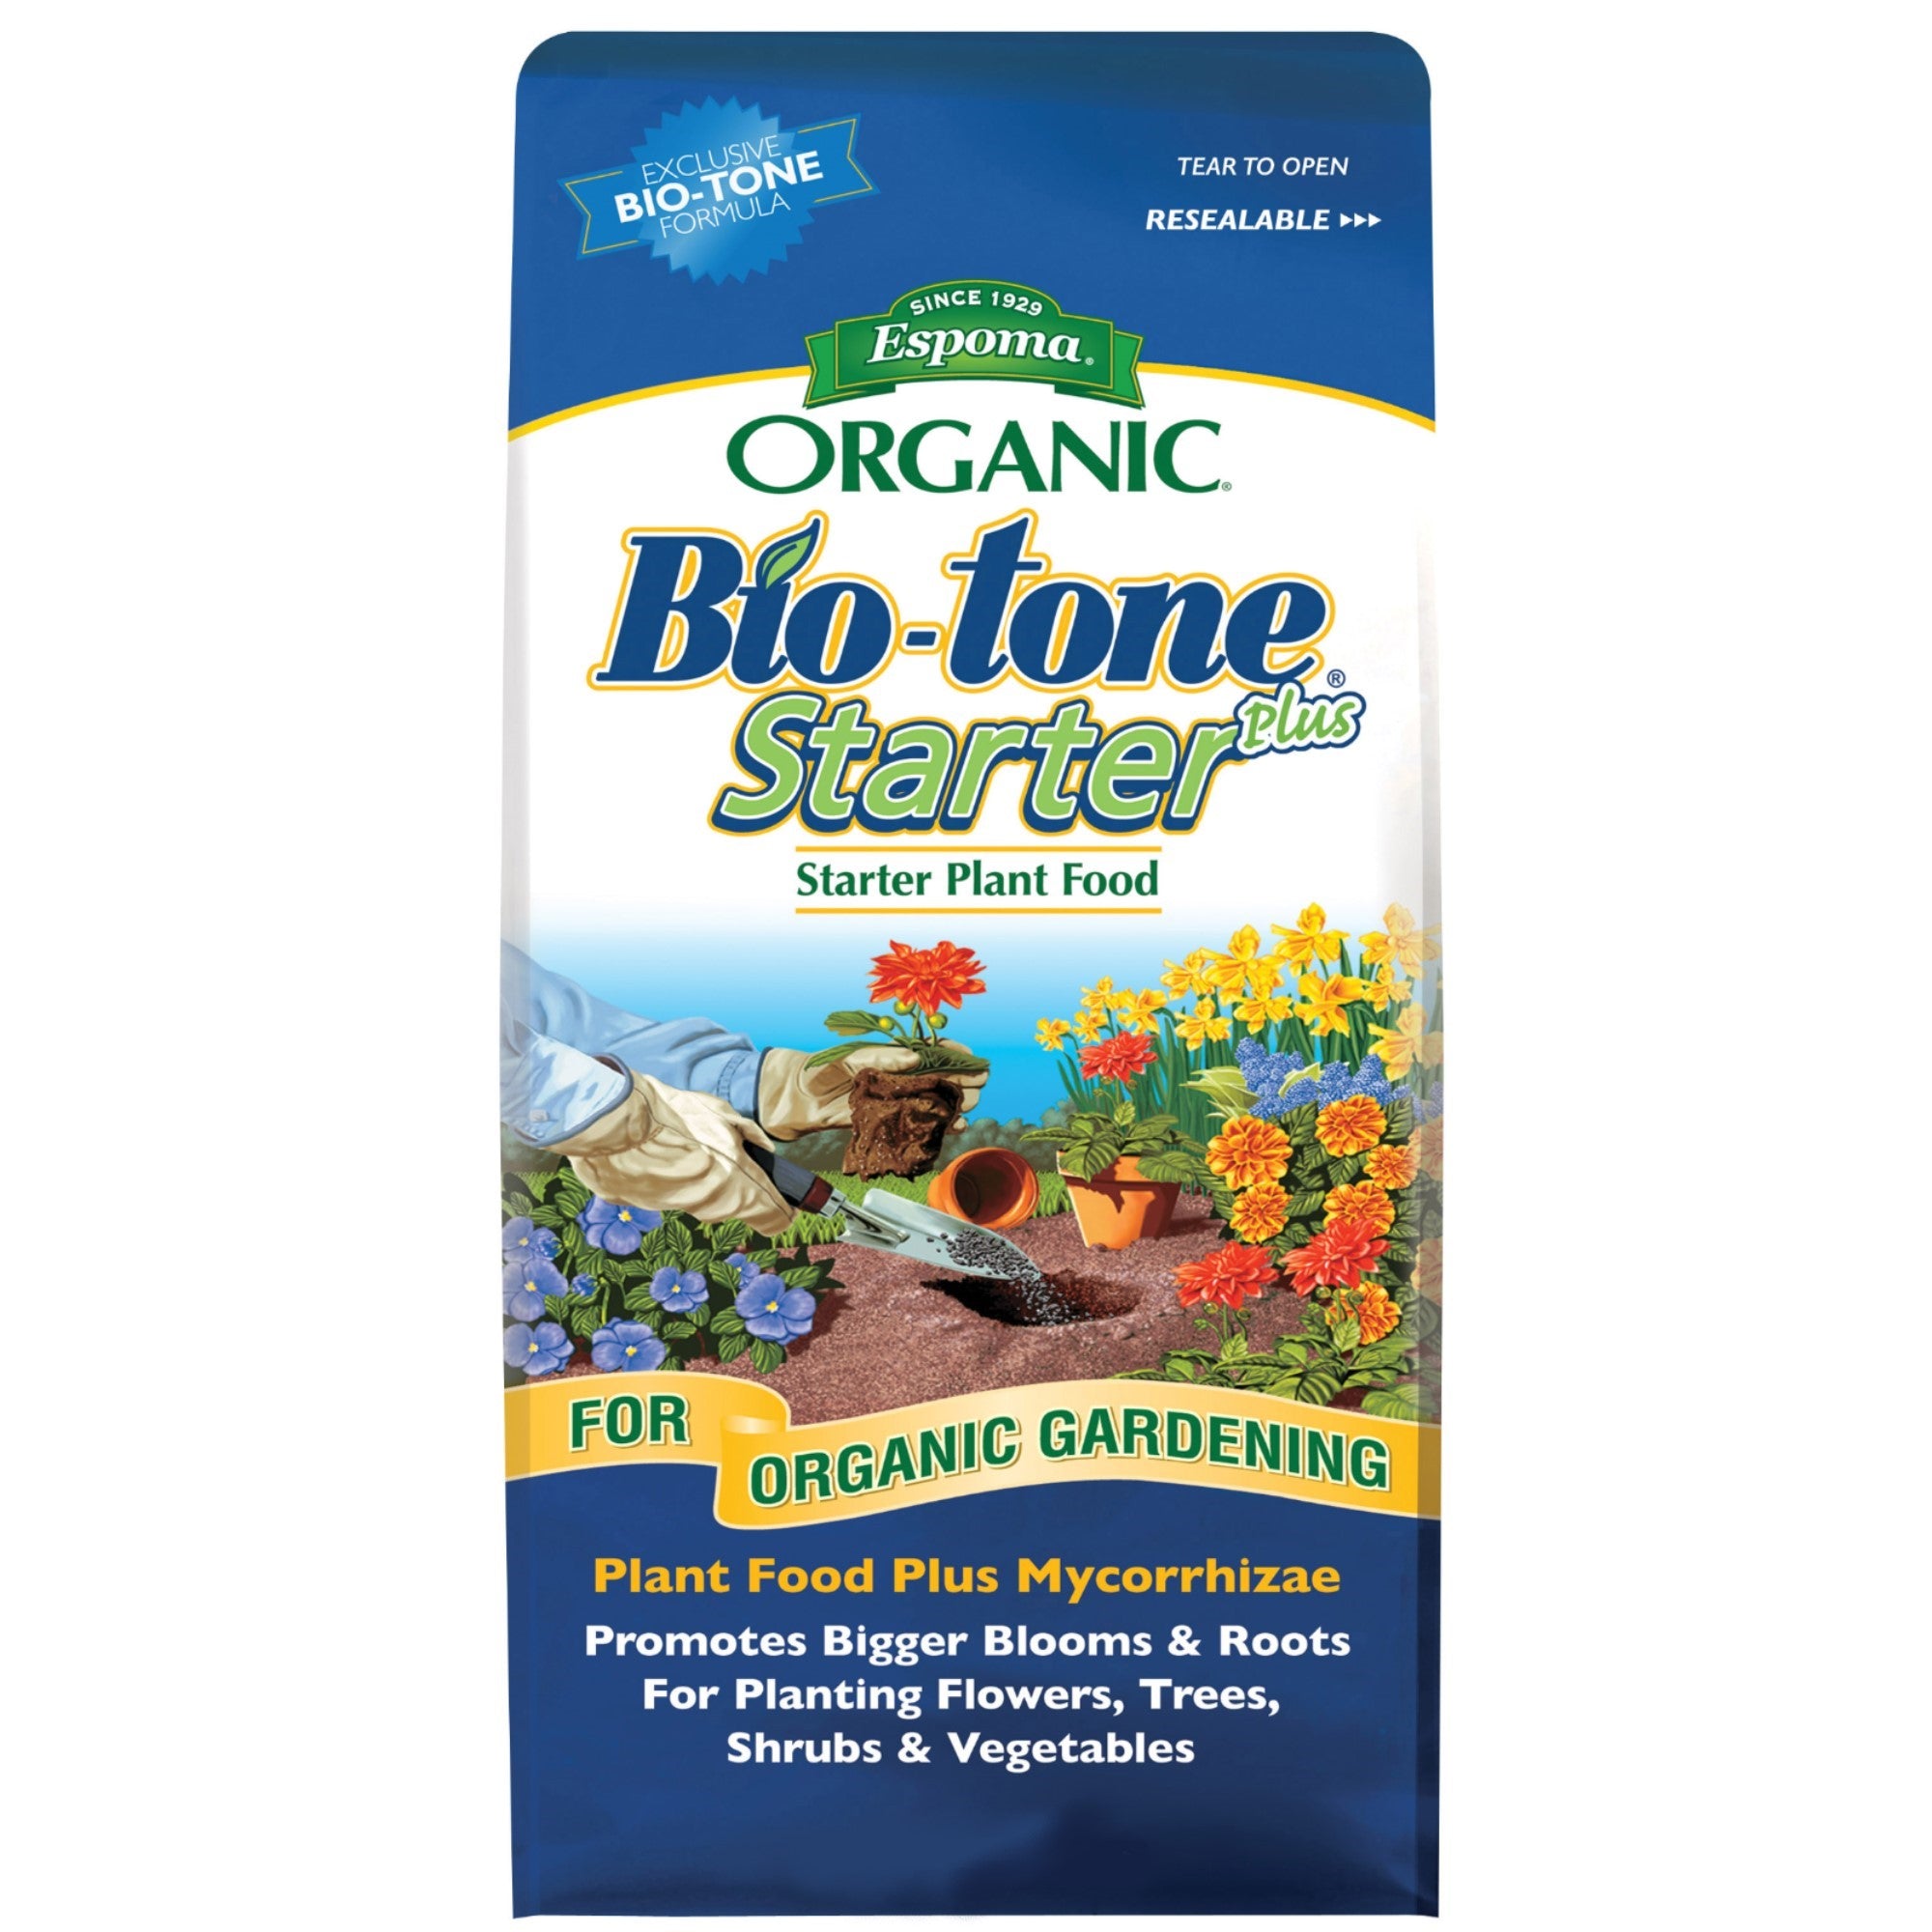 Espoma Organic Bio-tone Starter Plus 4-3-3 Starter Plant Food Plus Mycorrhizae, for Organic Gardening